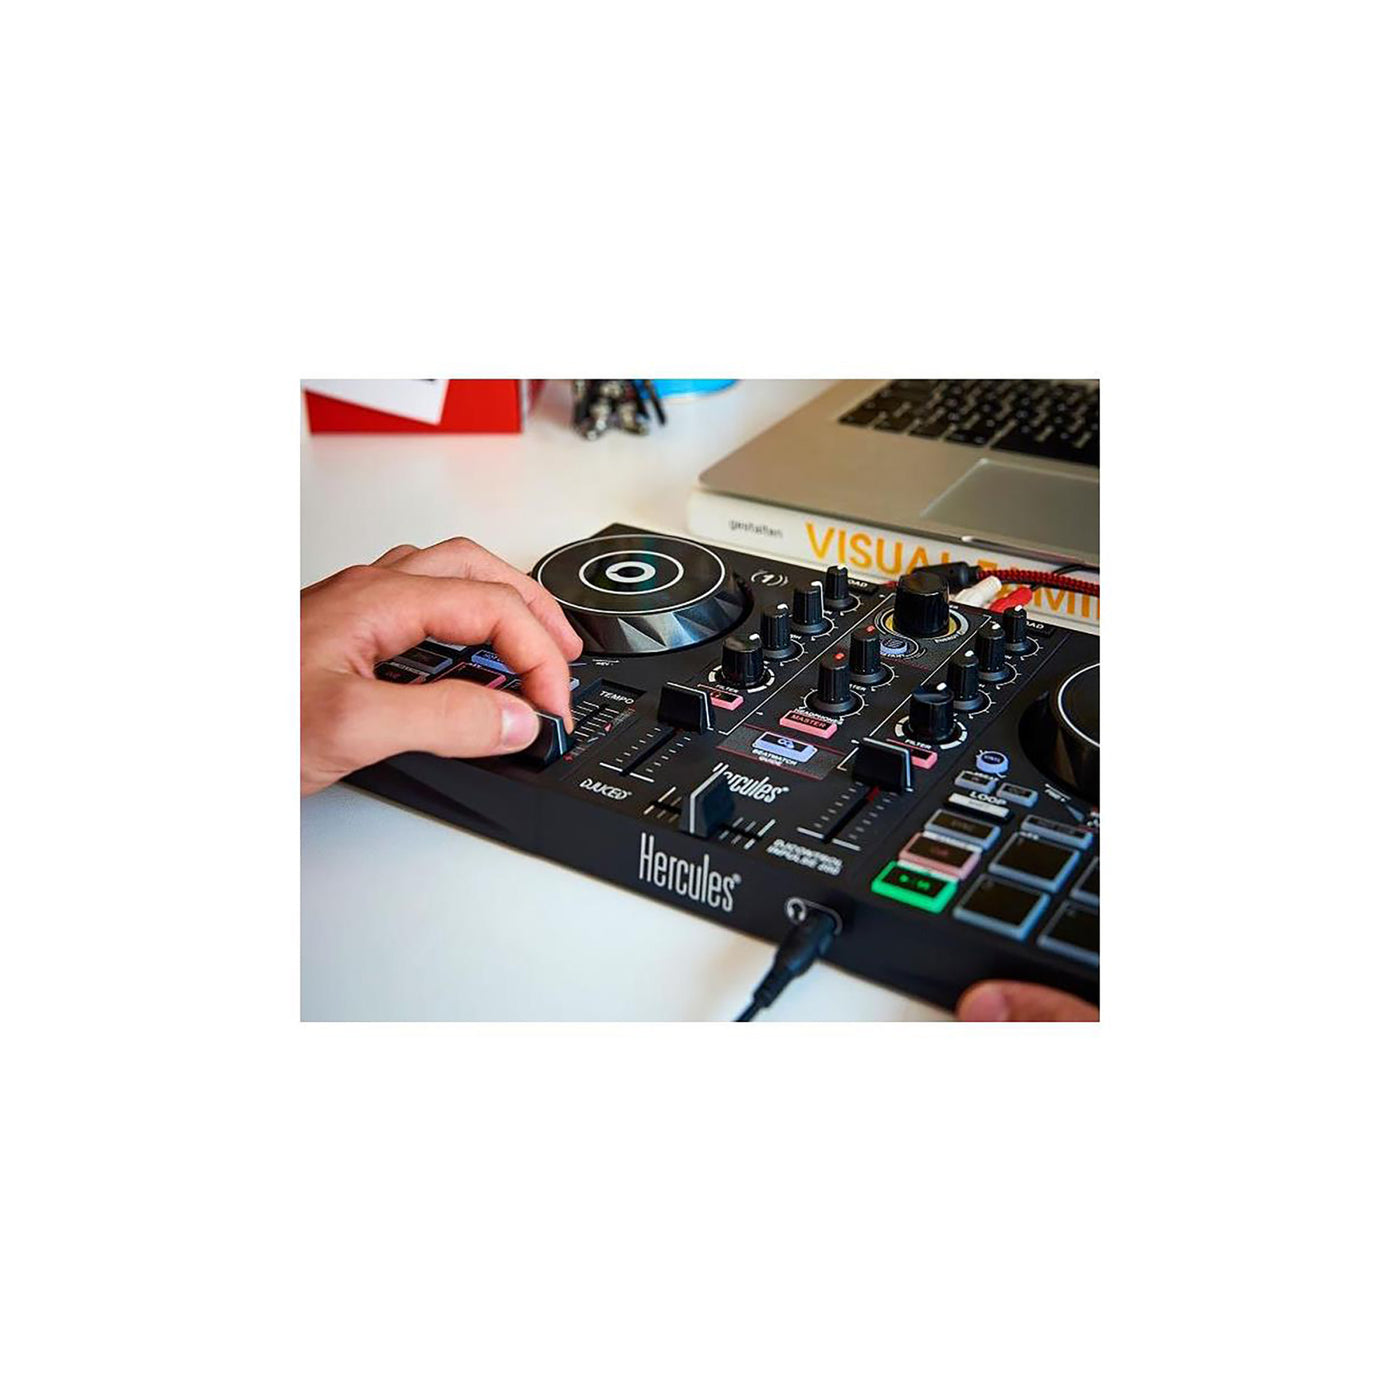 Hercules DJ Control Inpulse 200 2-Channel DJ Controller